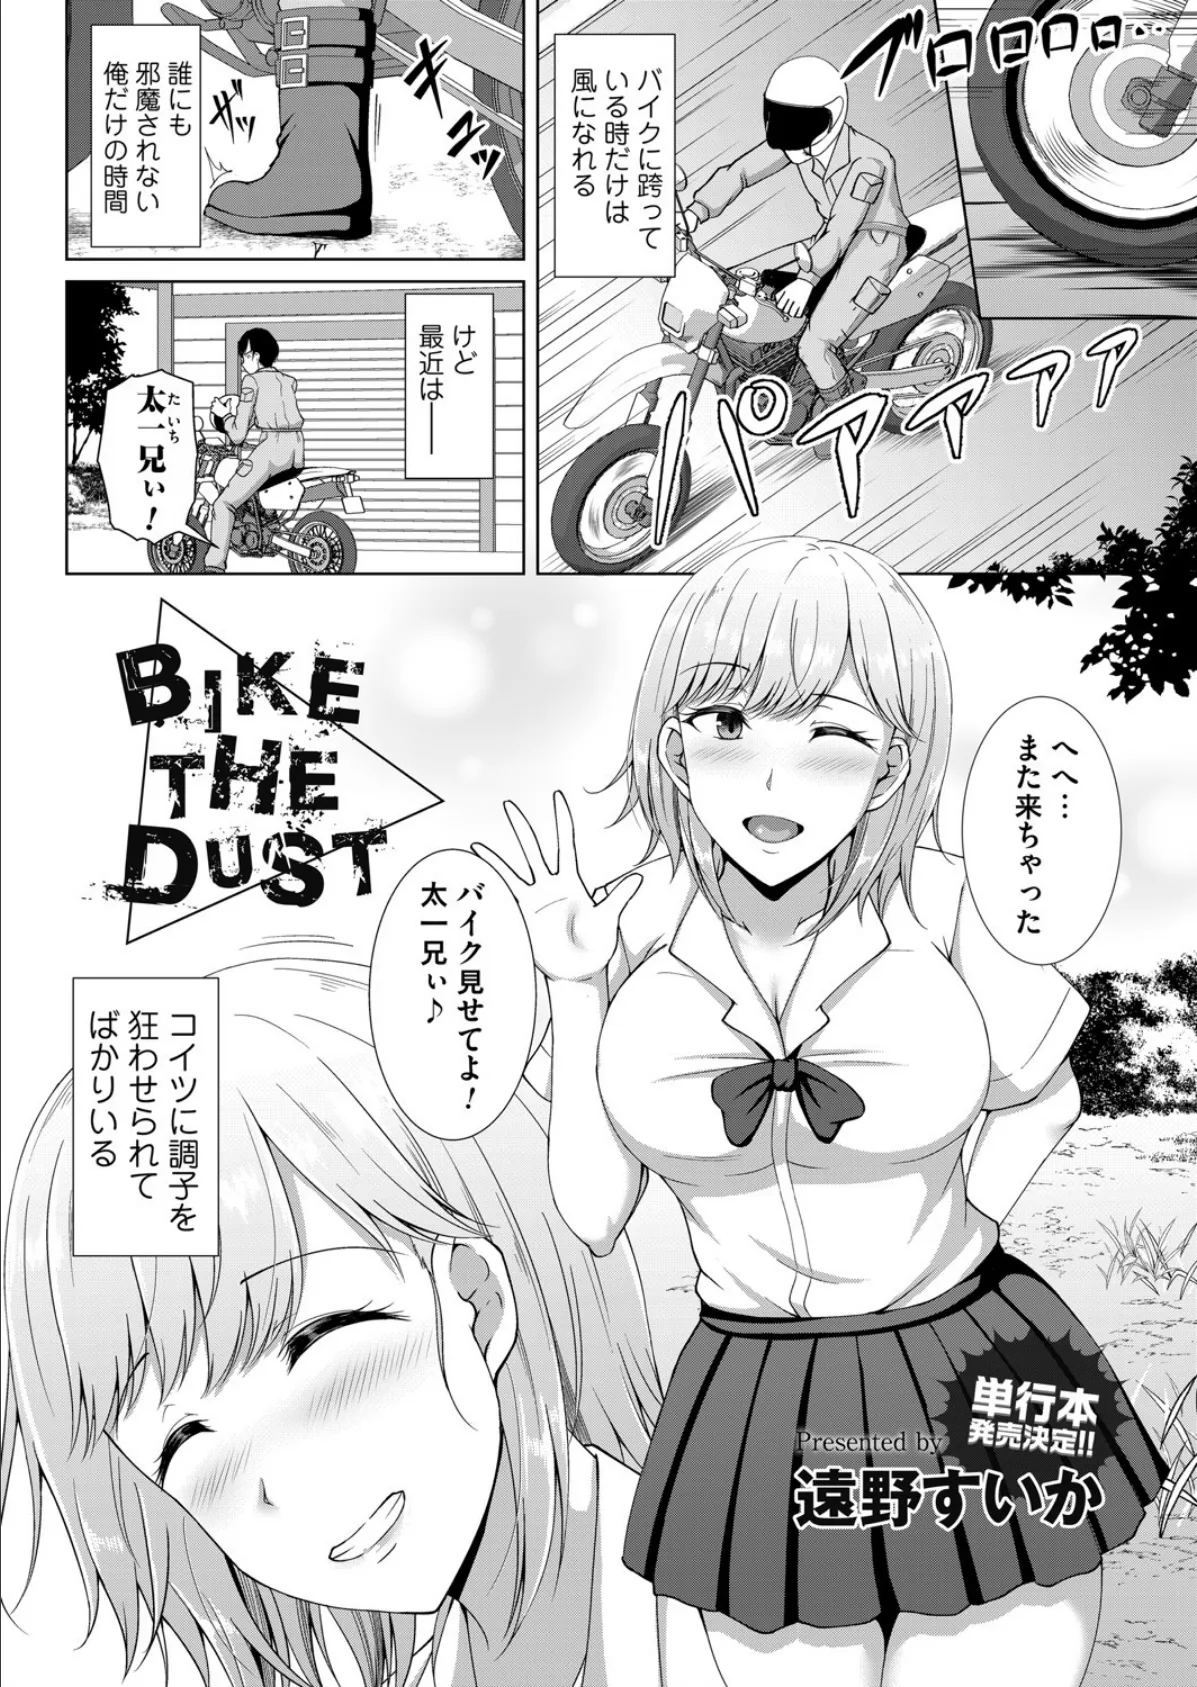 Bike the Dust 1ページ